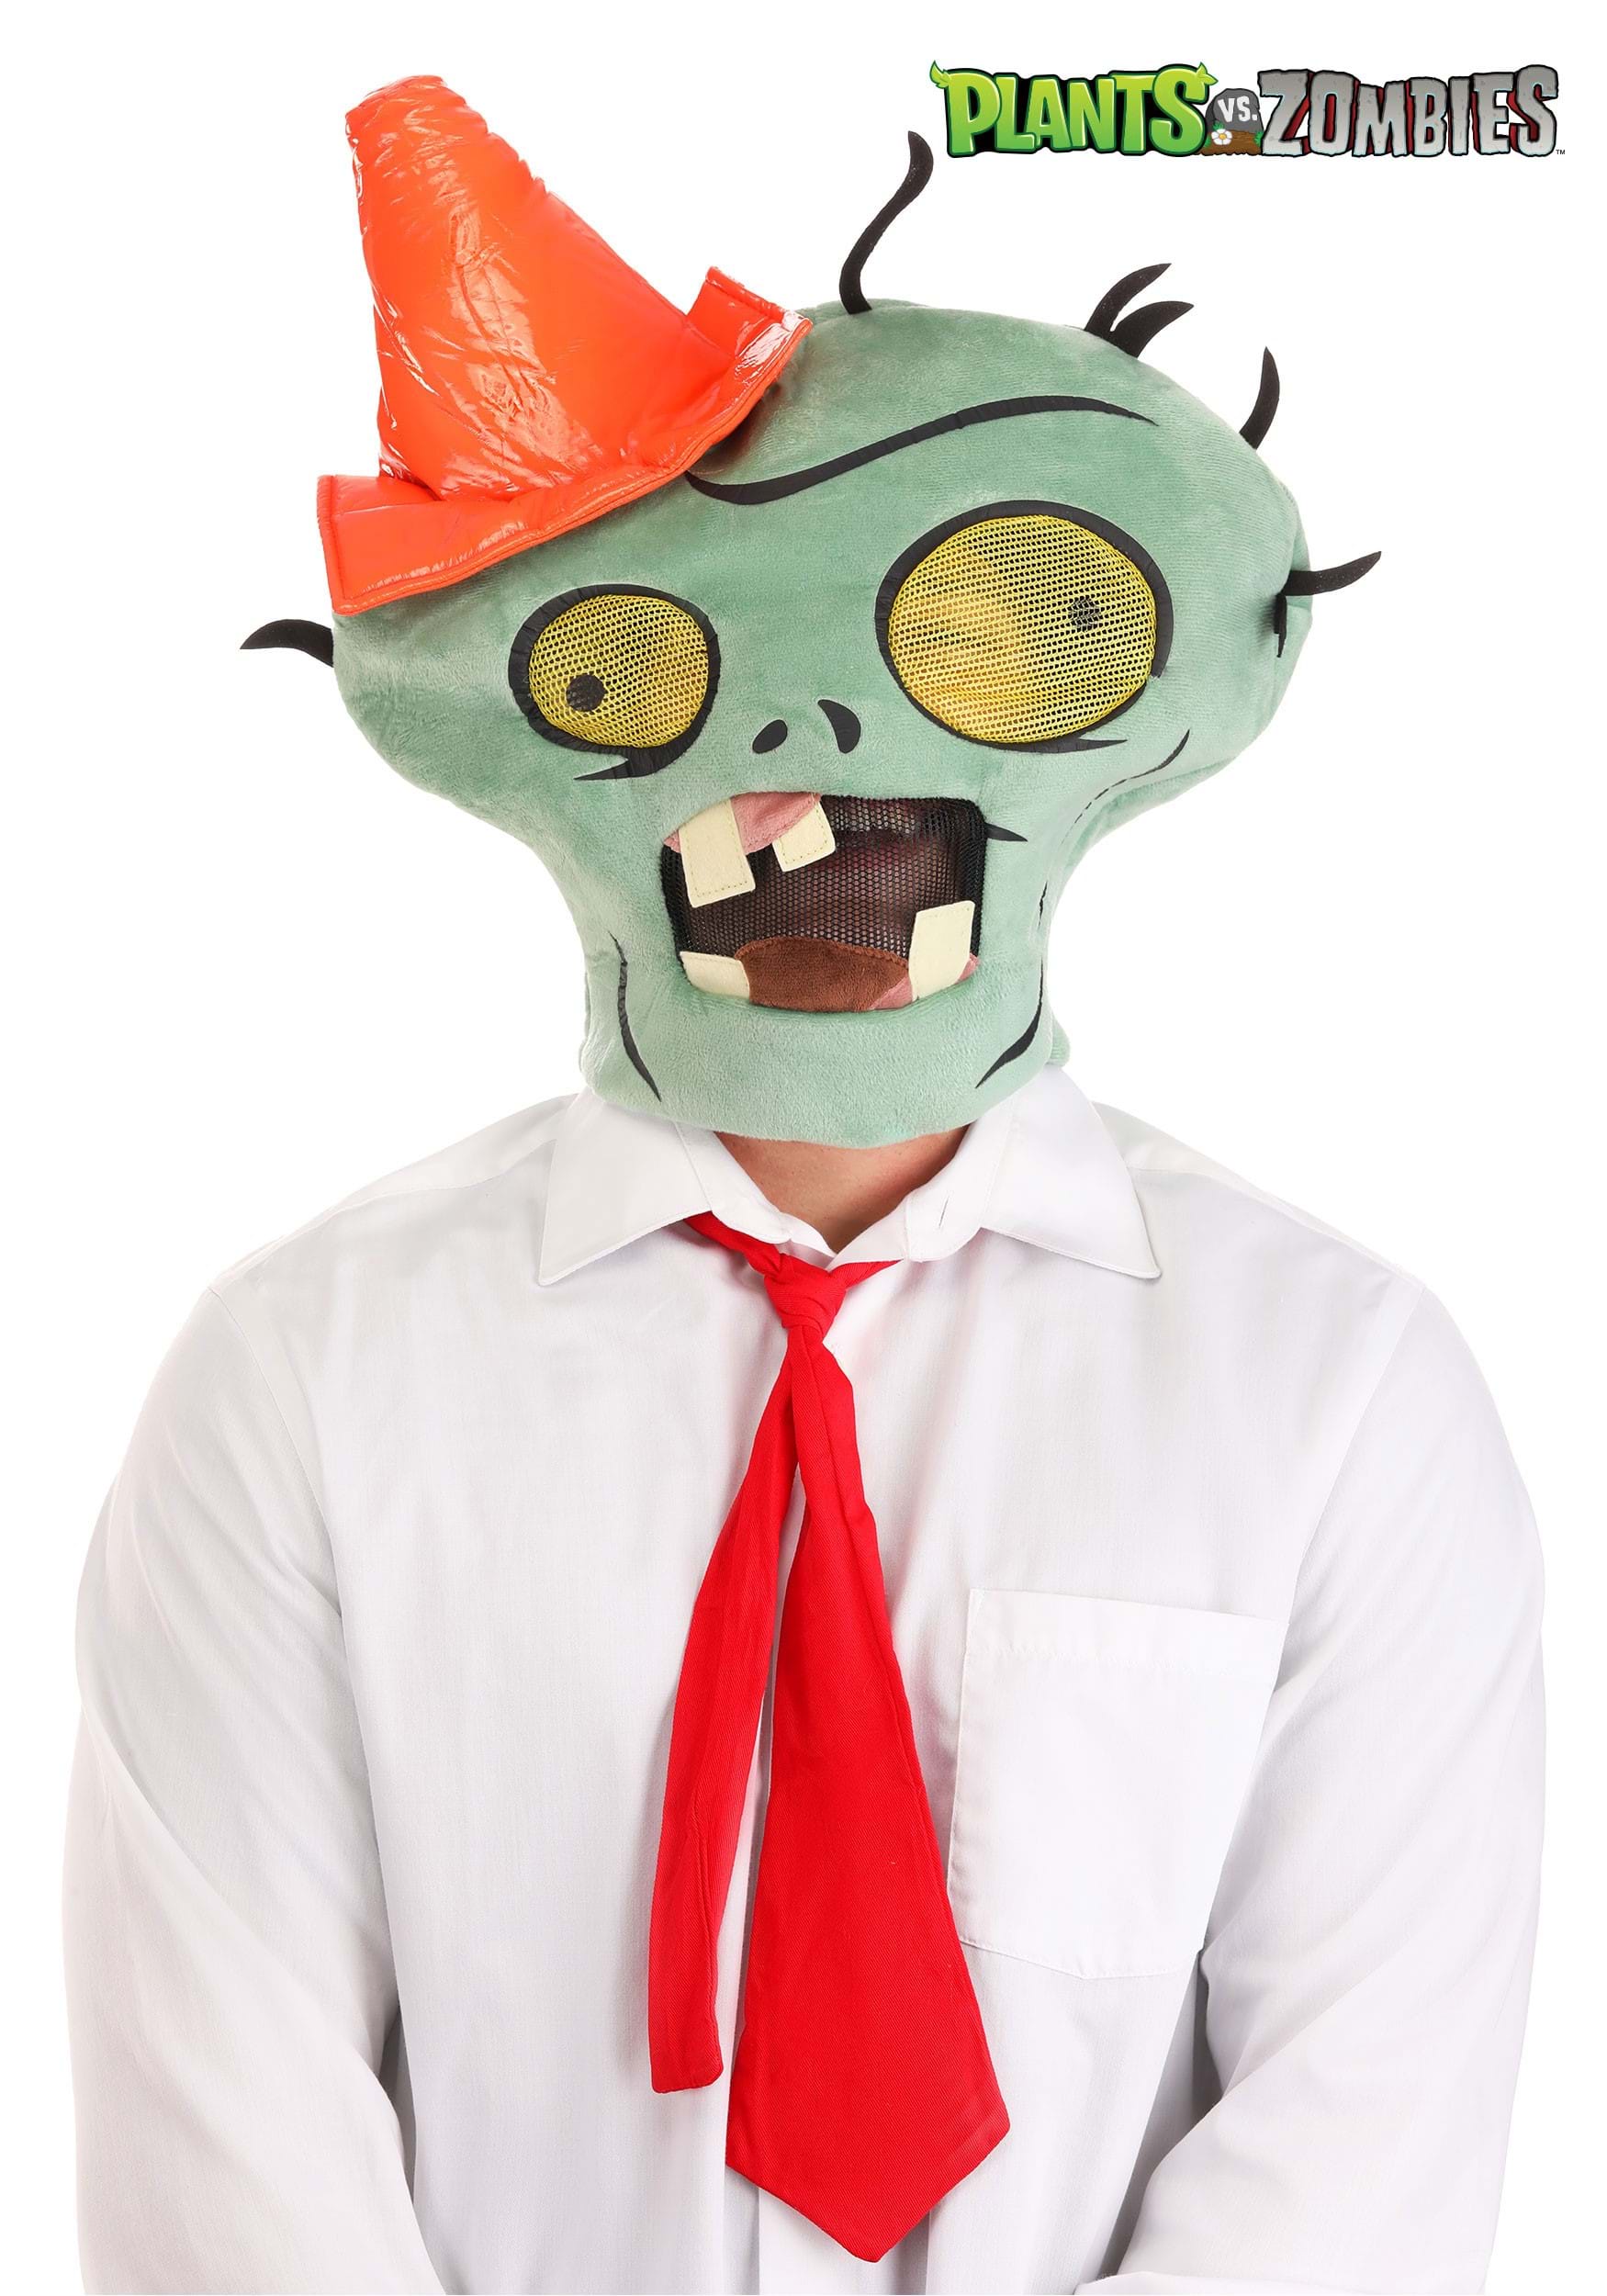 Plants Vs Zombies Zombie Costume for Kids